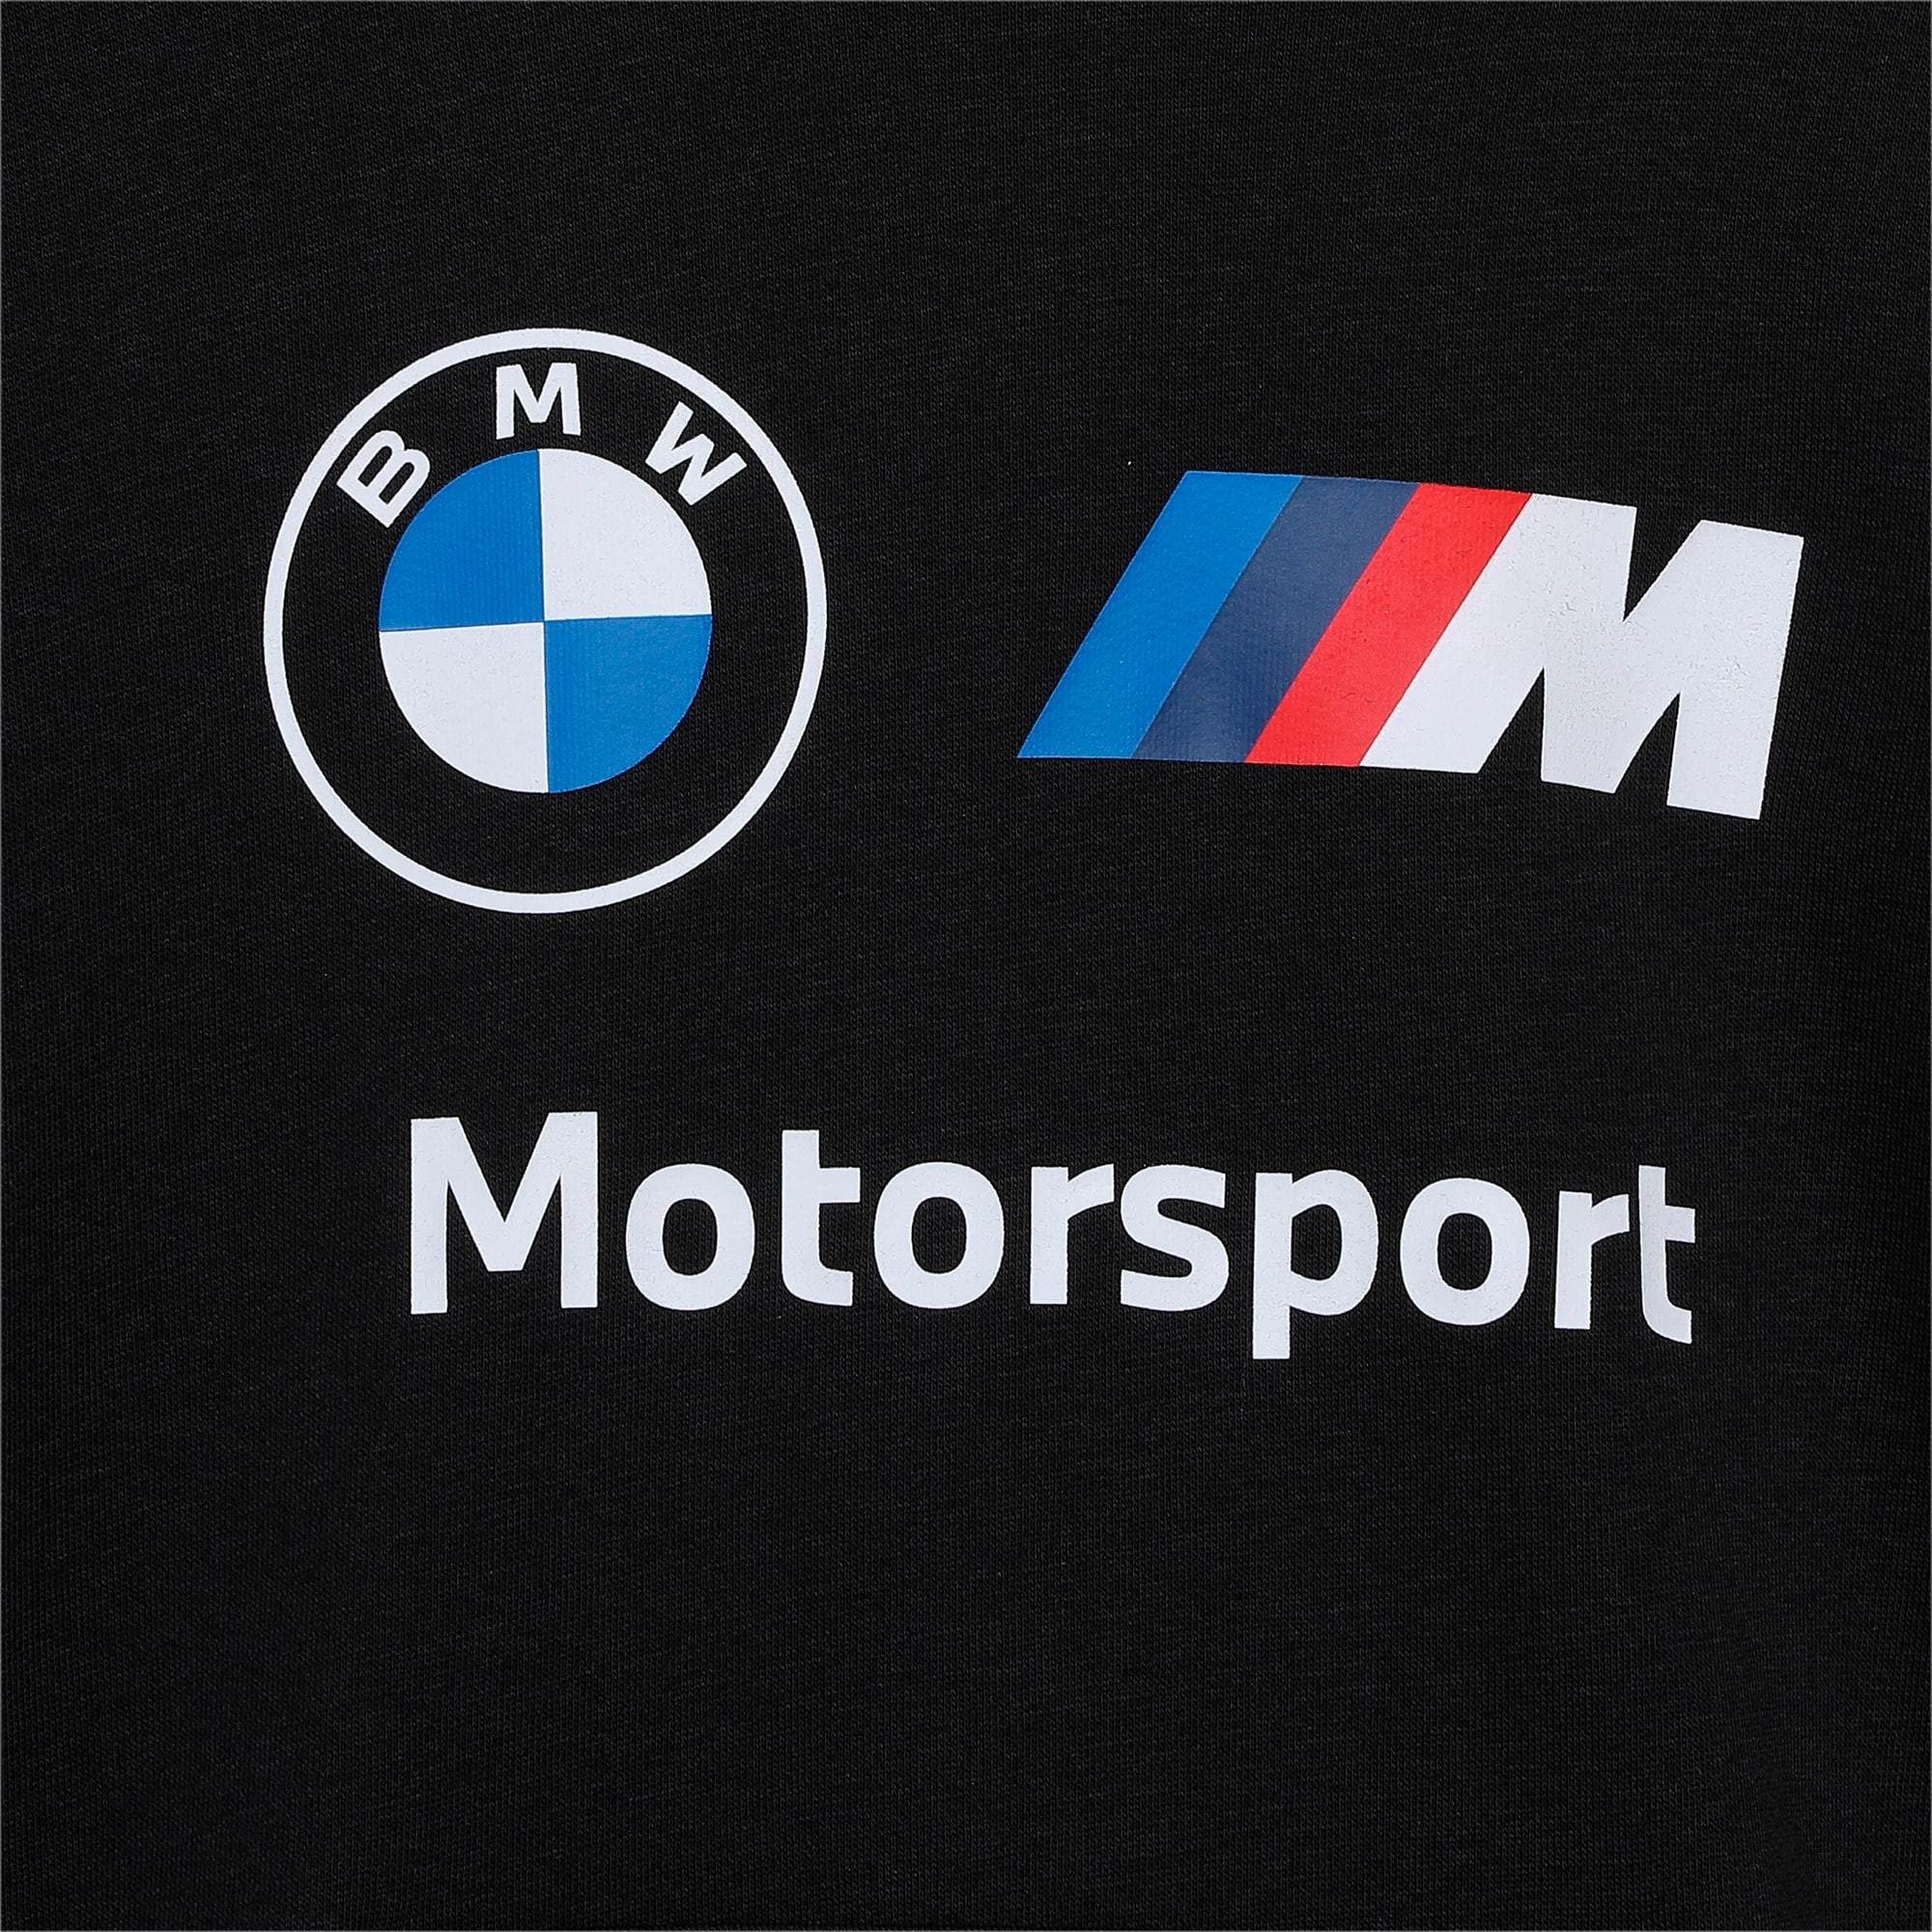 New BMW Gear Shift logo Bmw M power Unisex Hoodie Sweatshirt Size